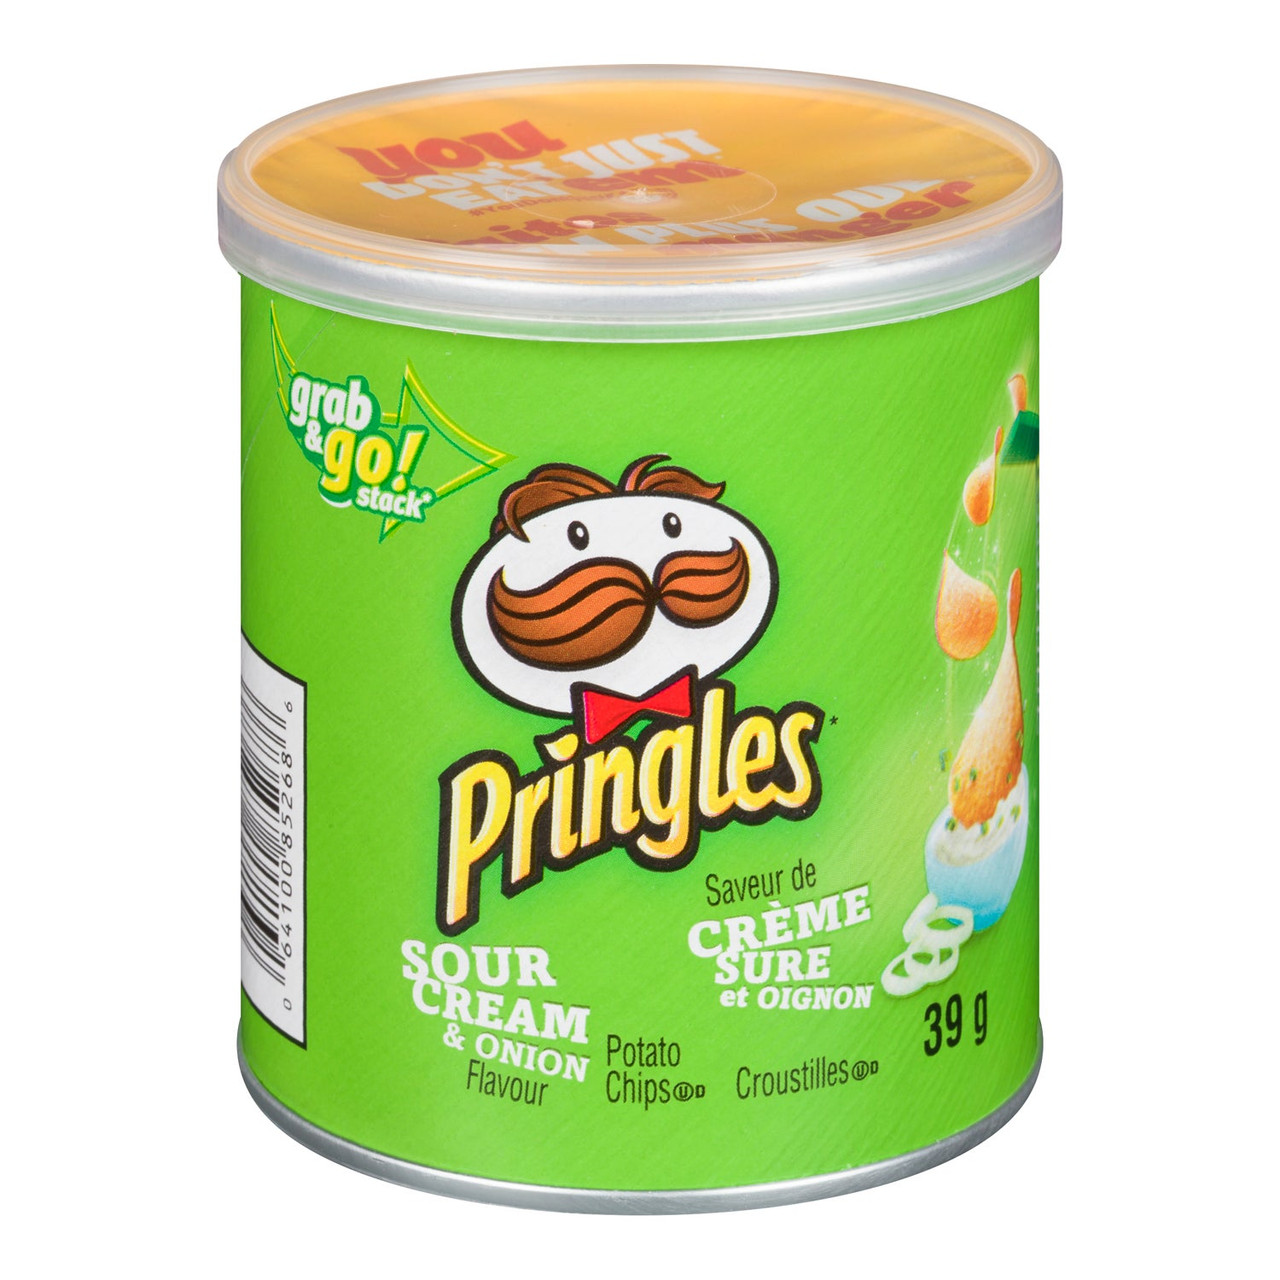 Pringles Sour Cream And Onion Potato Chips, Small Can | 39G/Unit, 12 ...